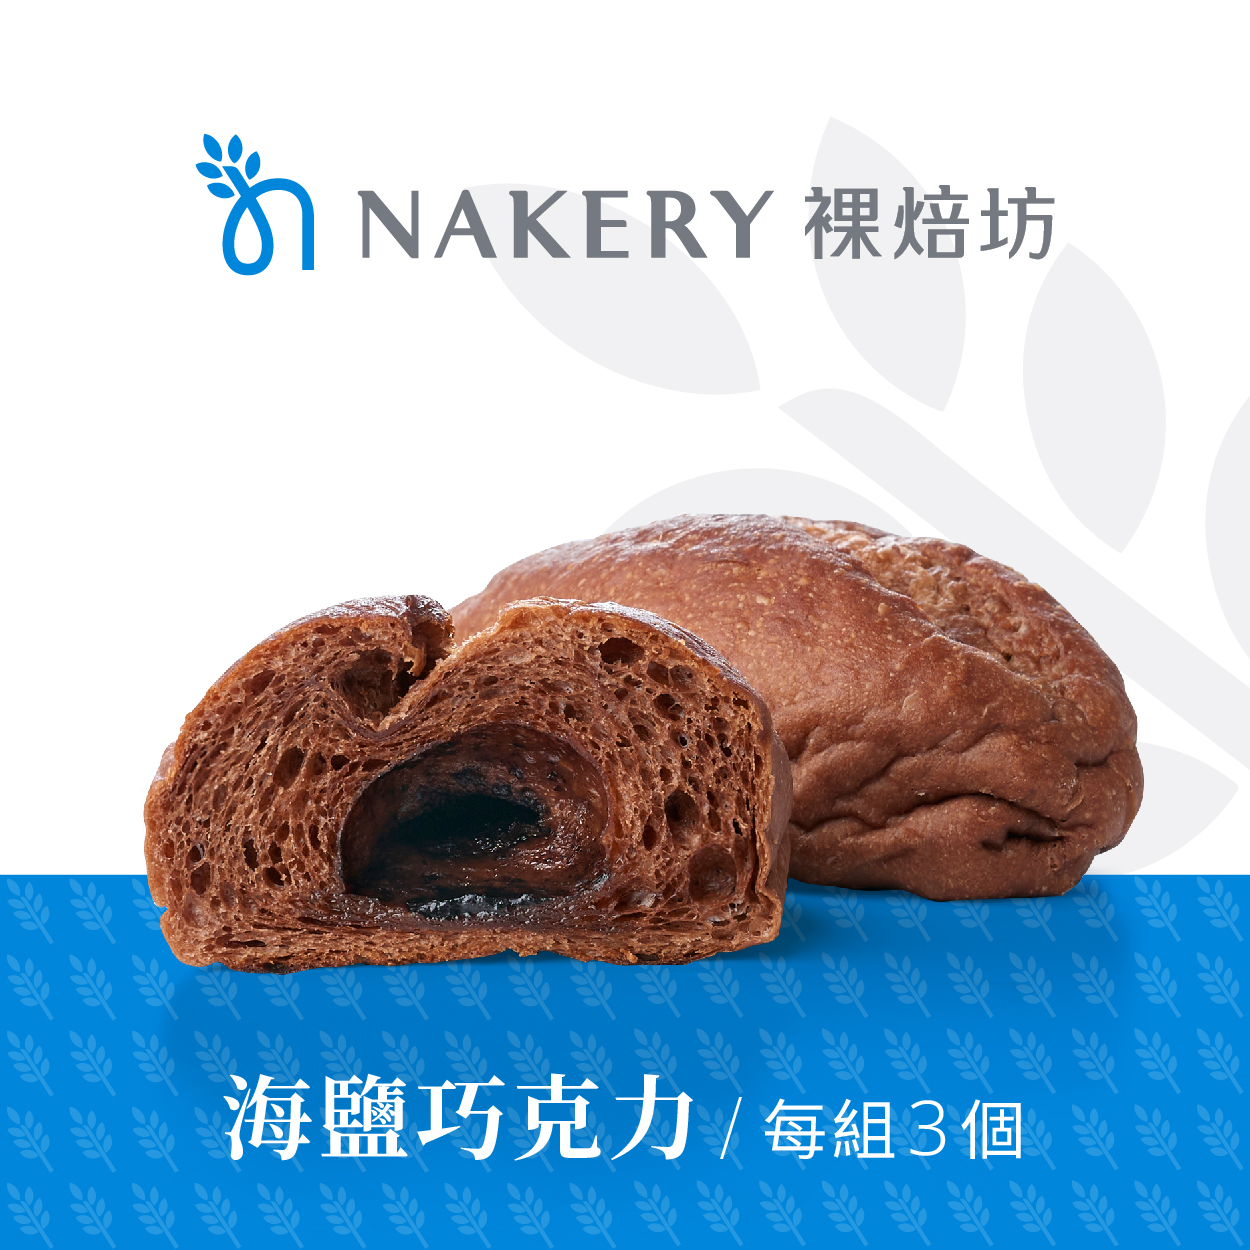 Nakery裸焙坊 黃豆核桃軟法+海鹽巧克力，超級麵包雙重美味